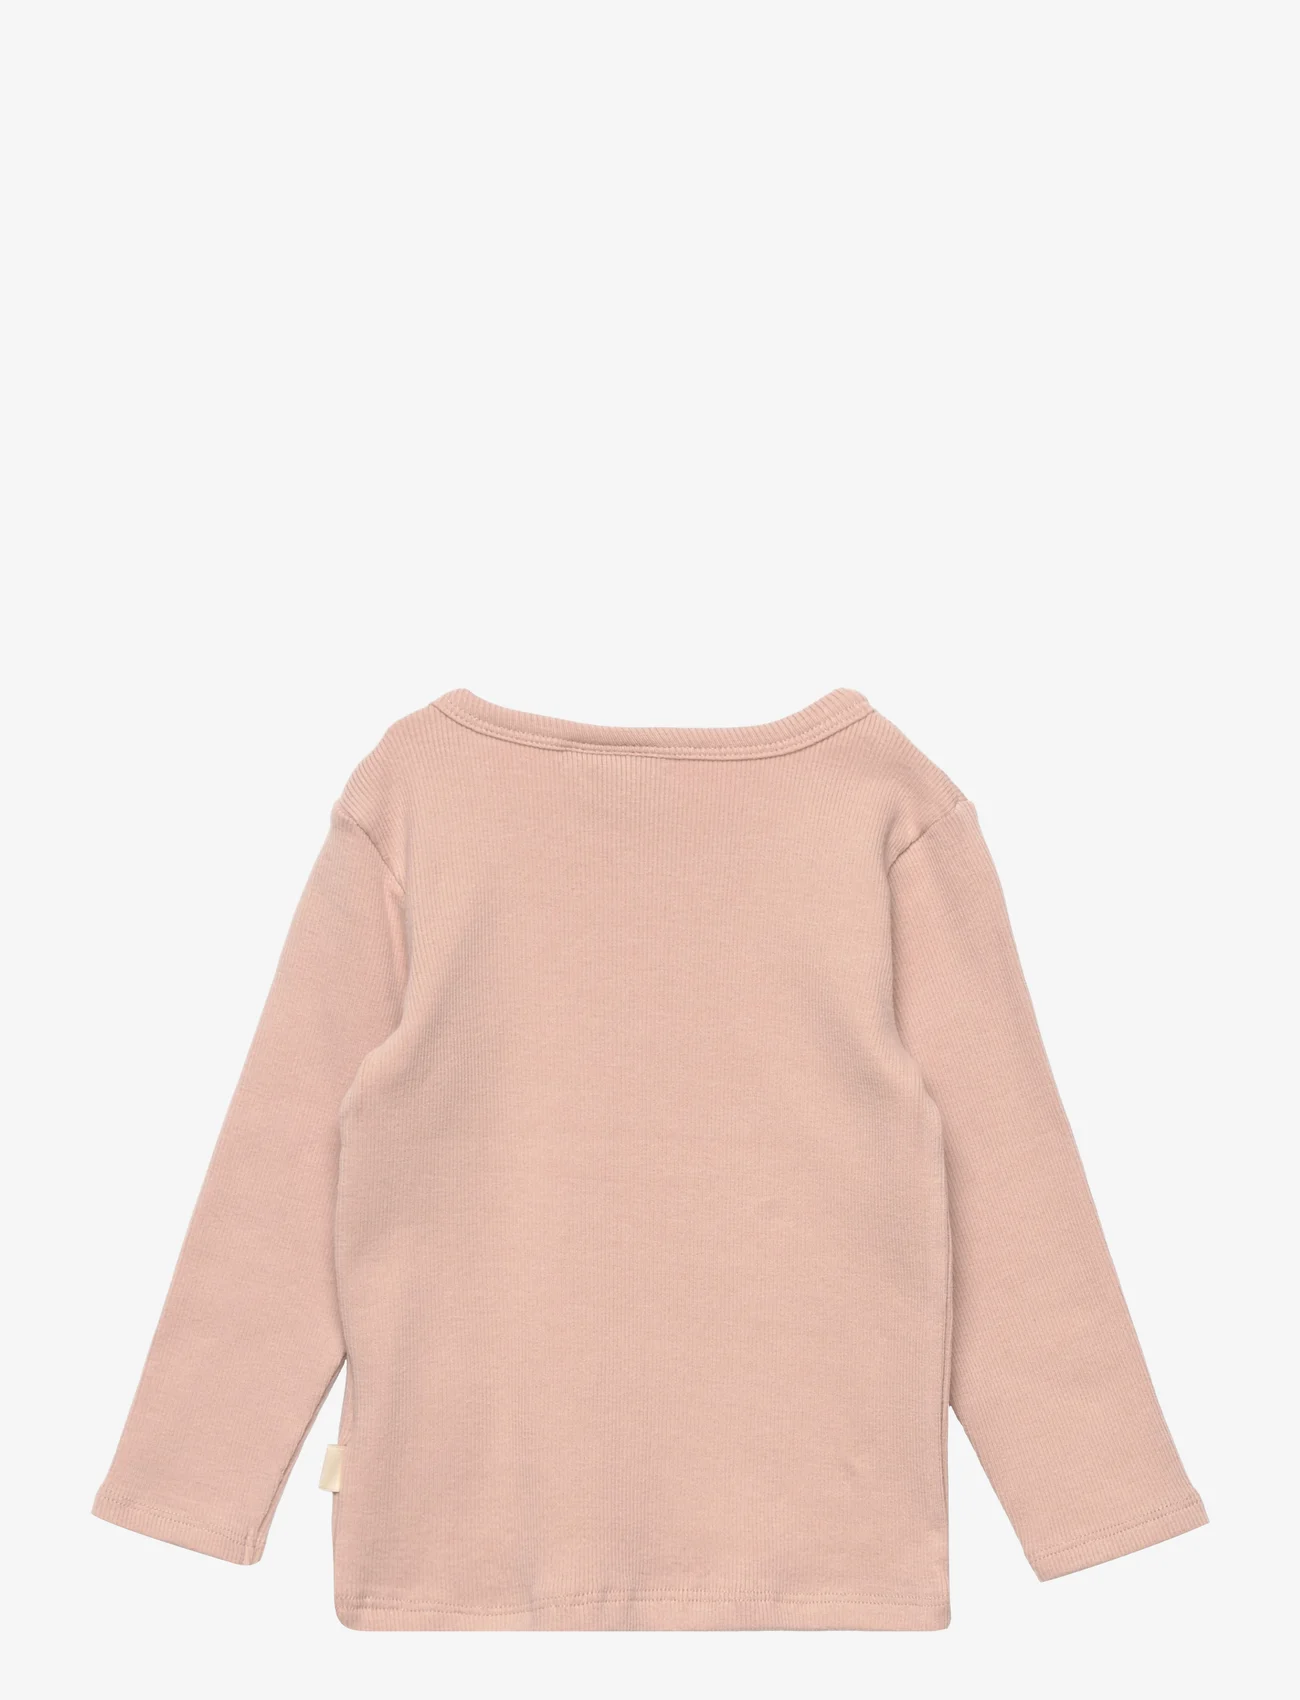 Sofie Schnoor Baby and Kids - T-shirt long-sleeve - langärmelige - light rose - 1